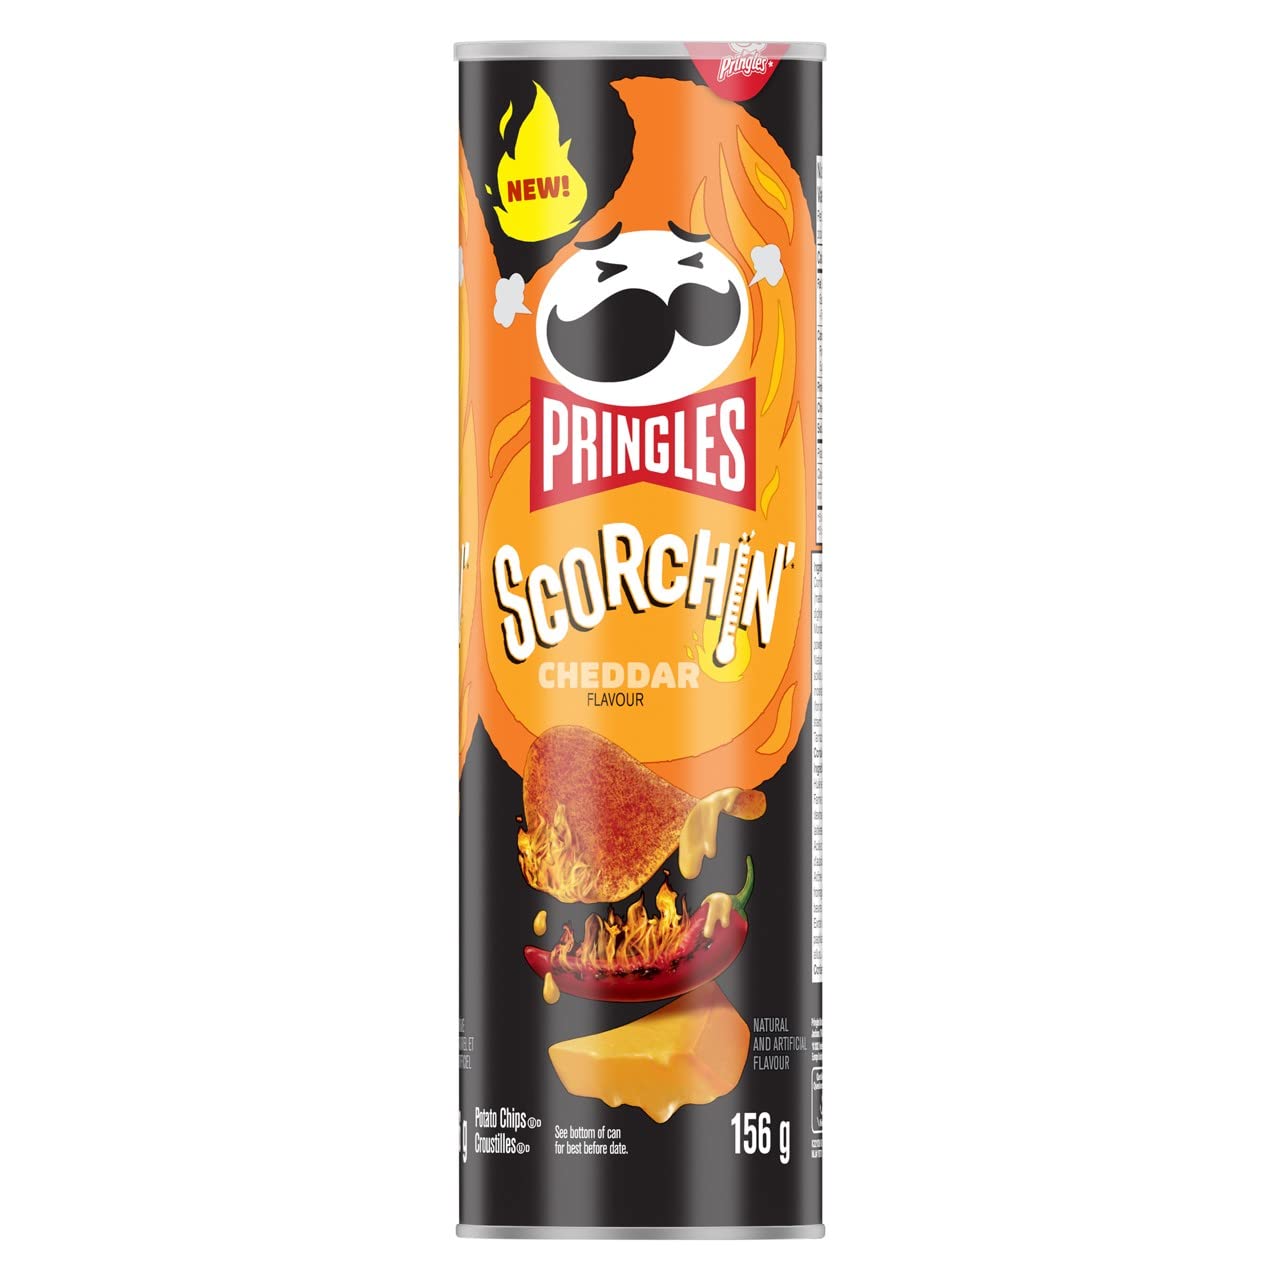 Pringles Scorchin’ Hot Cheddar